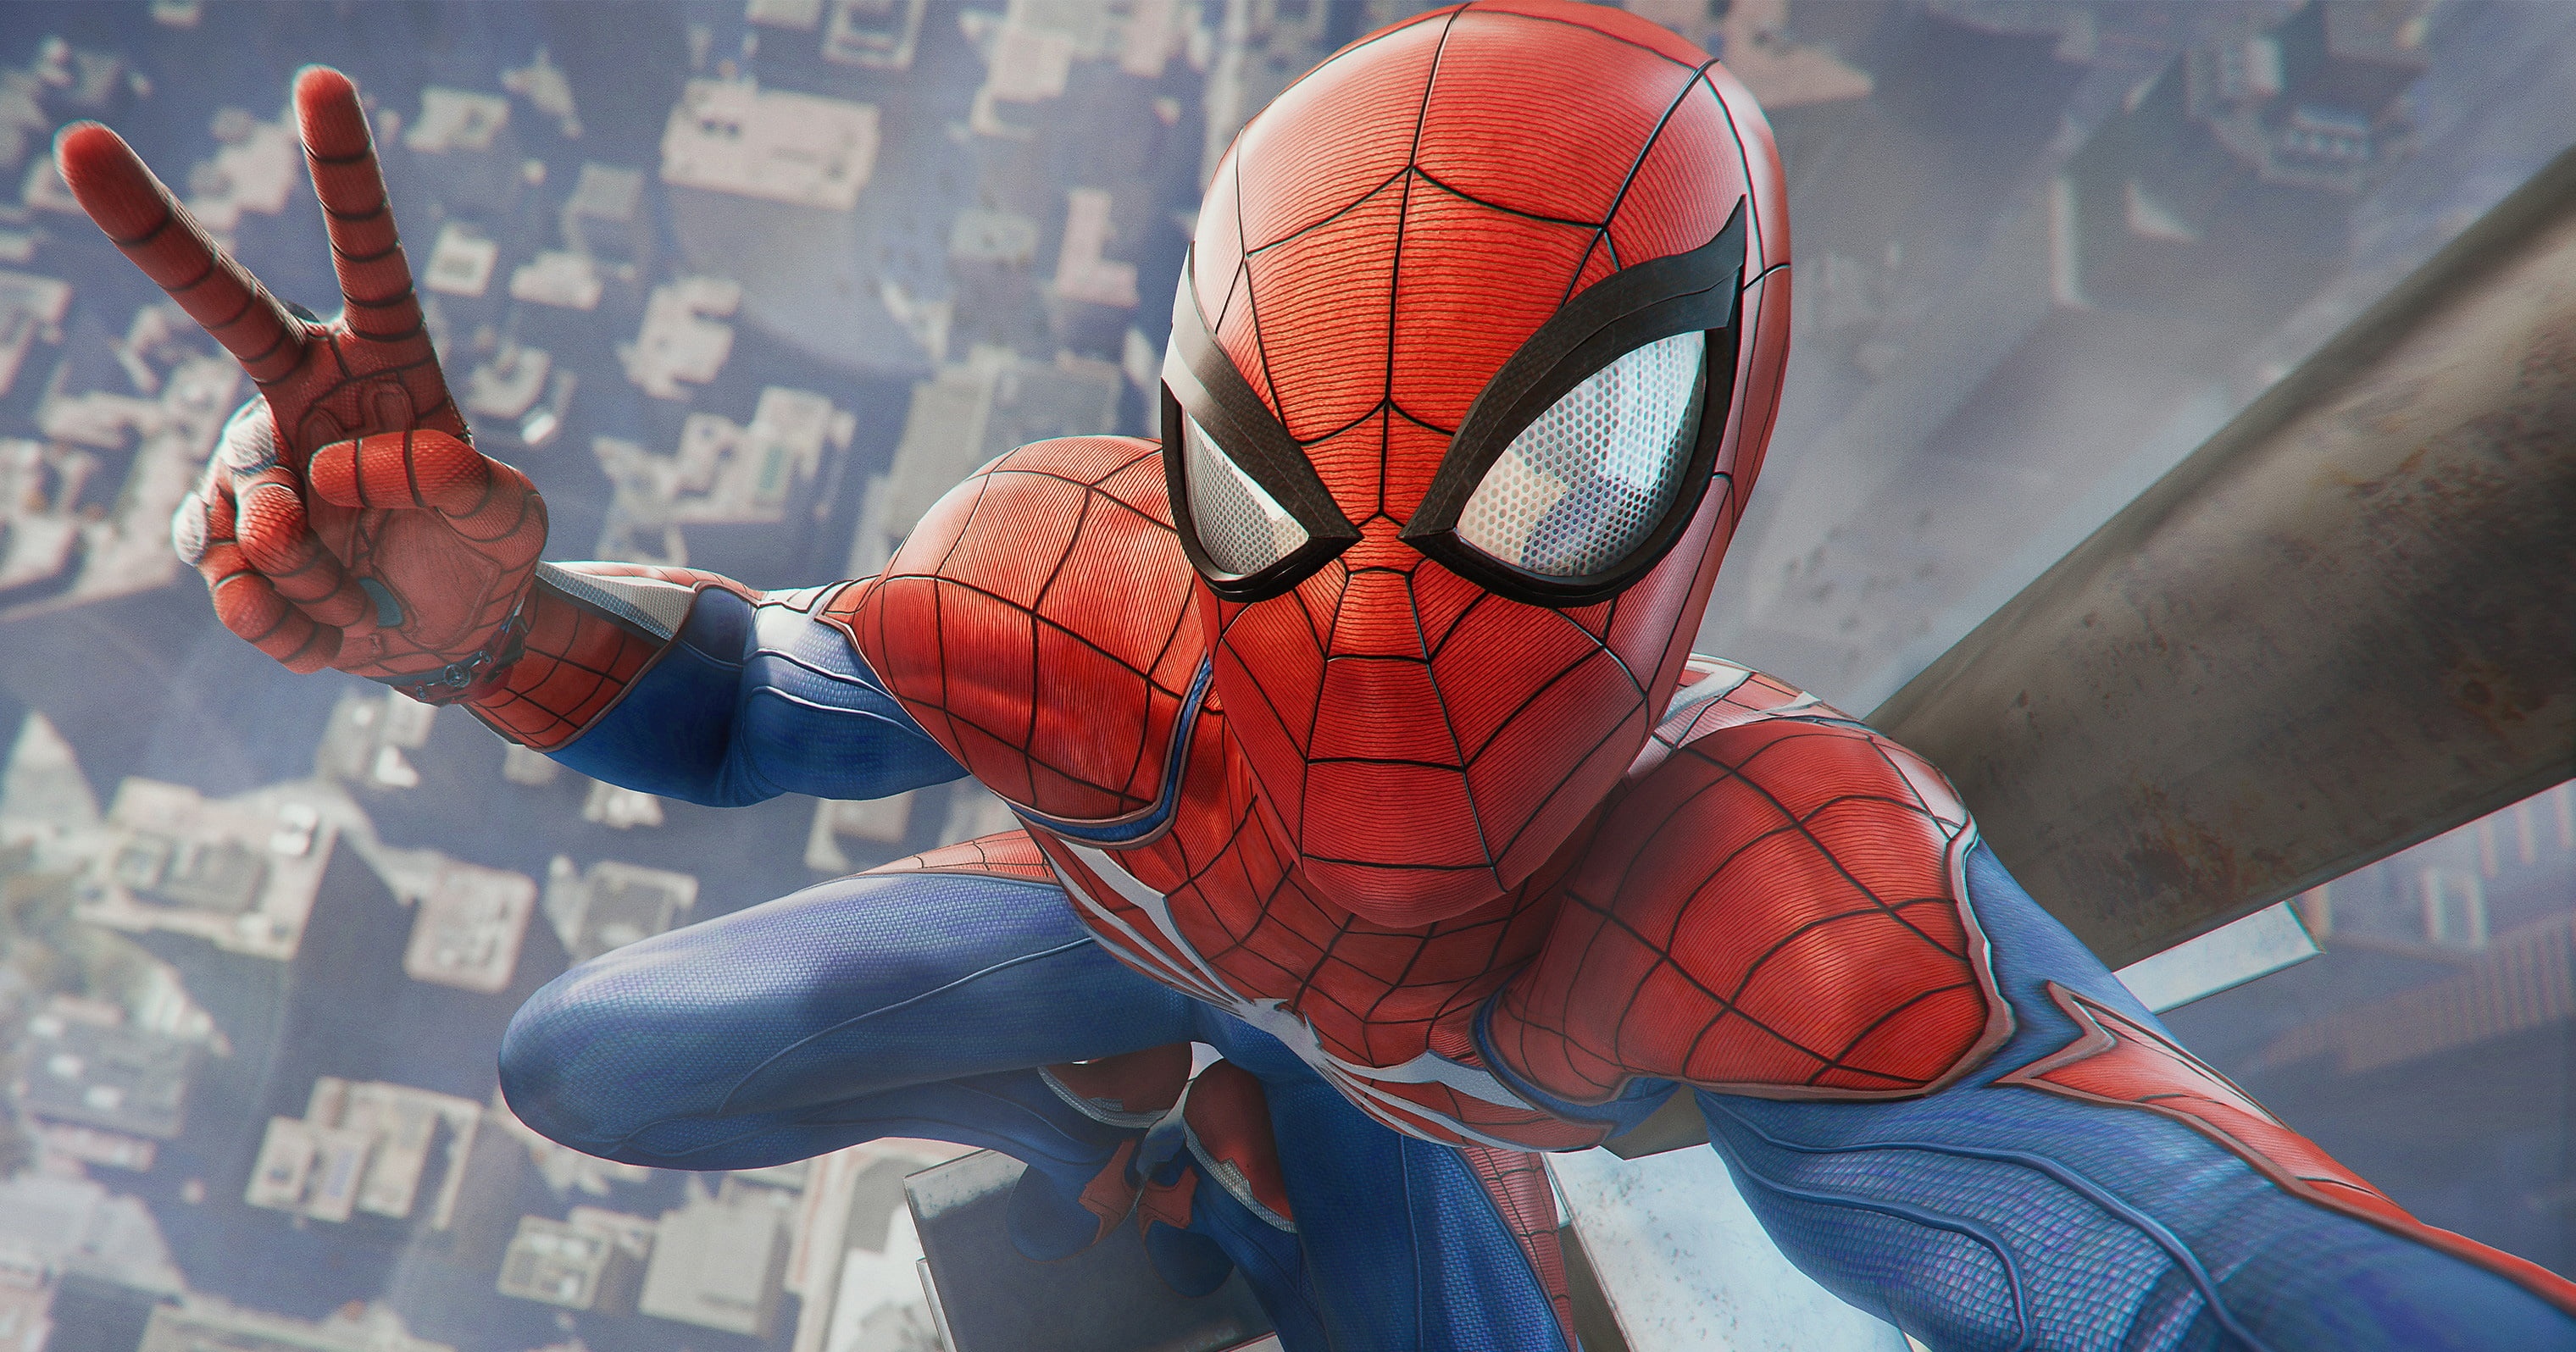 spider-man-marvel-comics-playstation-4-update.jpg